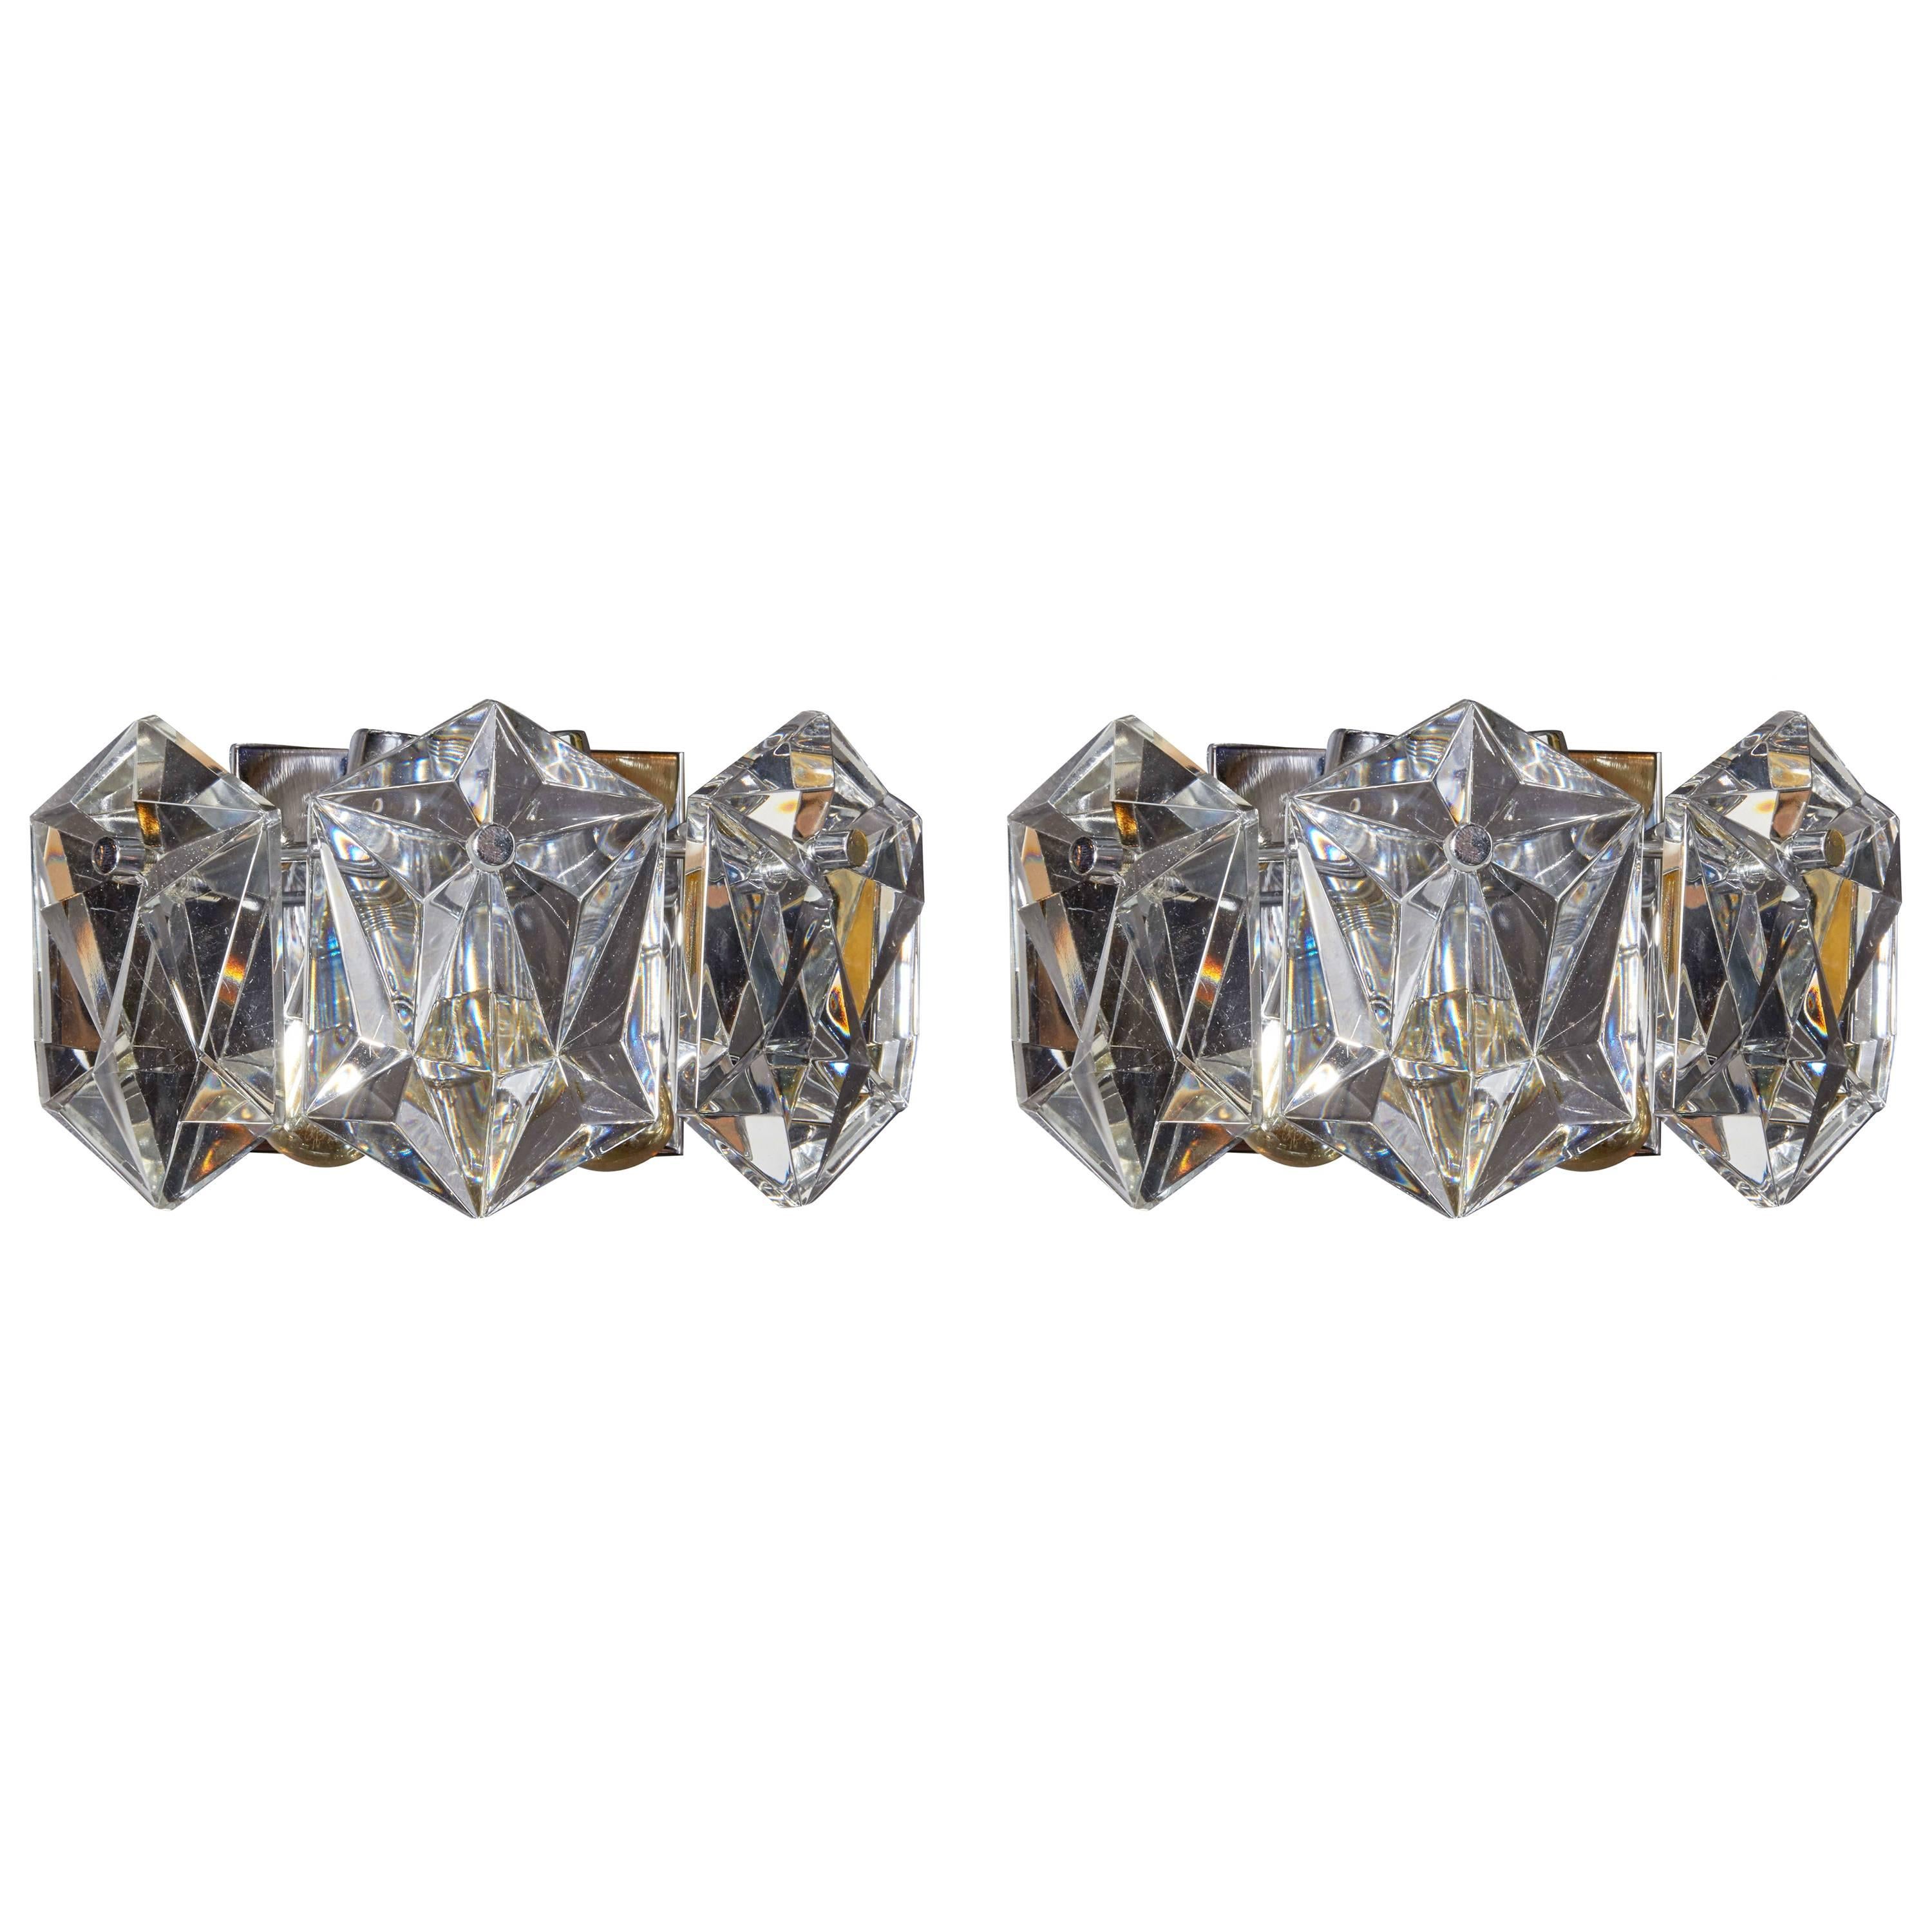 Pair of Petite Faceted Crystal Sconces Designed by Kinkeldey